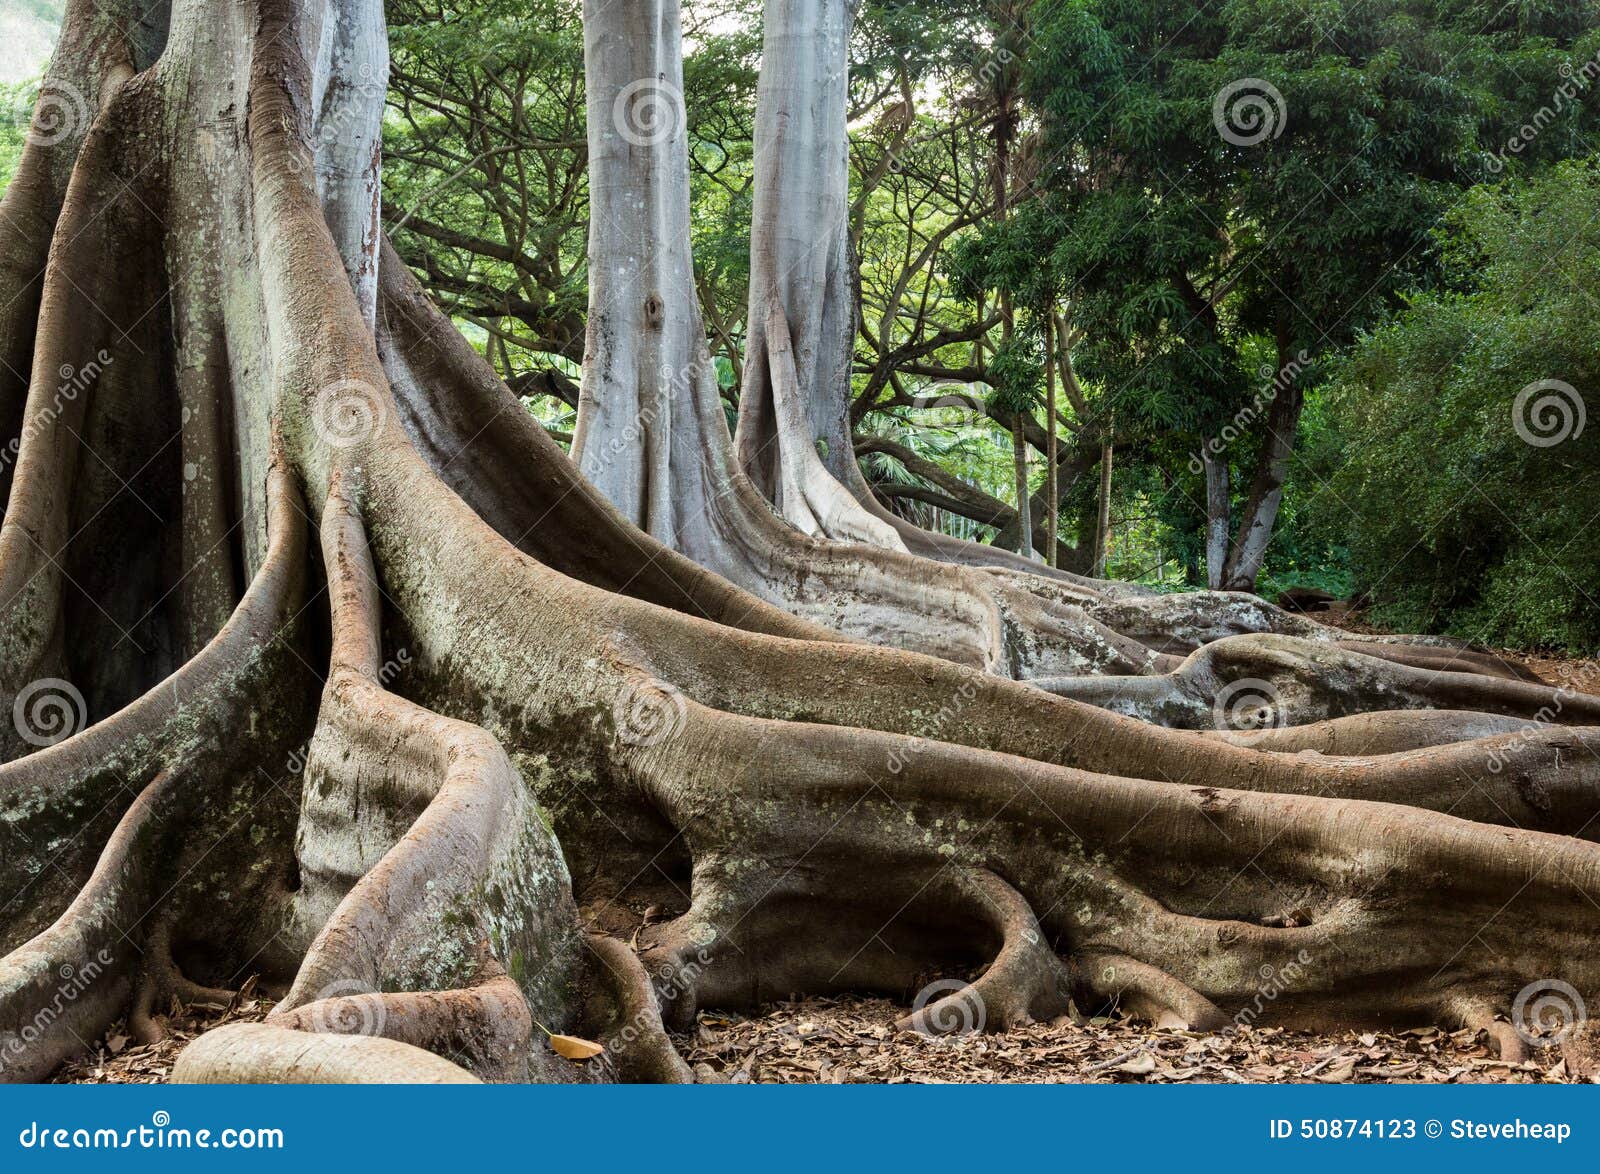 moreton bay fig tree roots